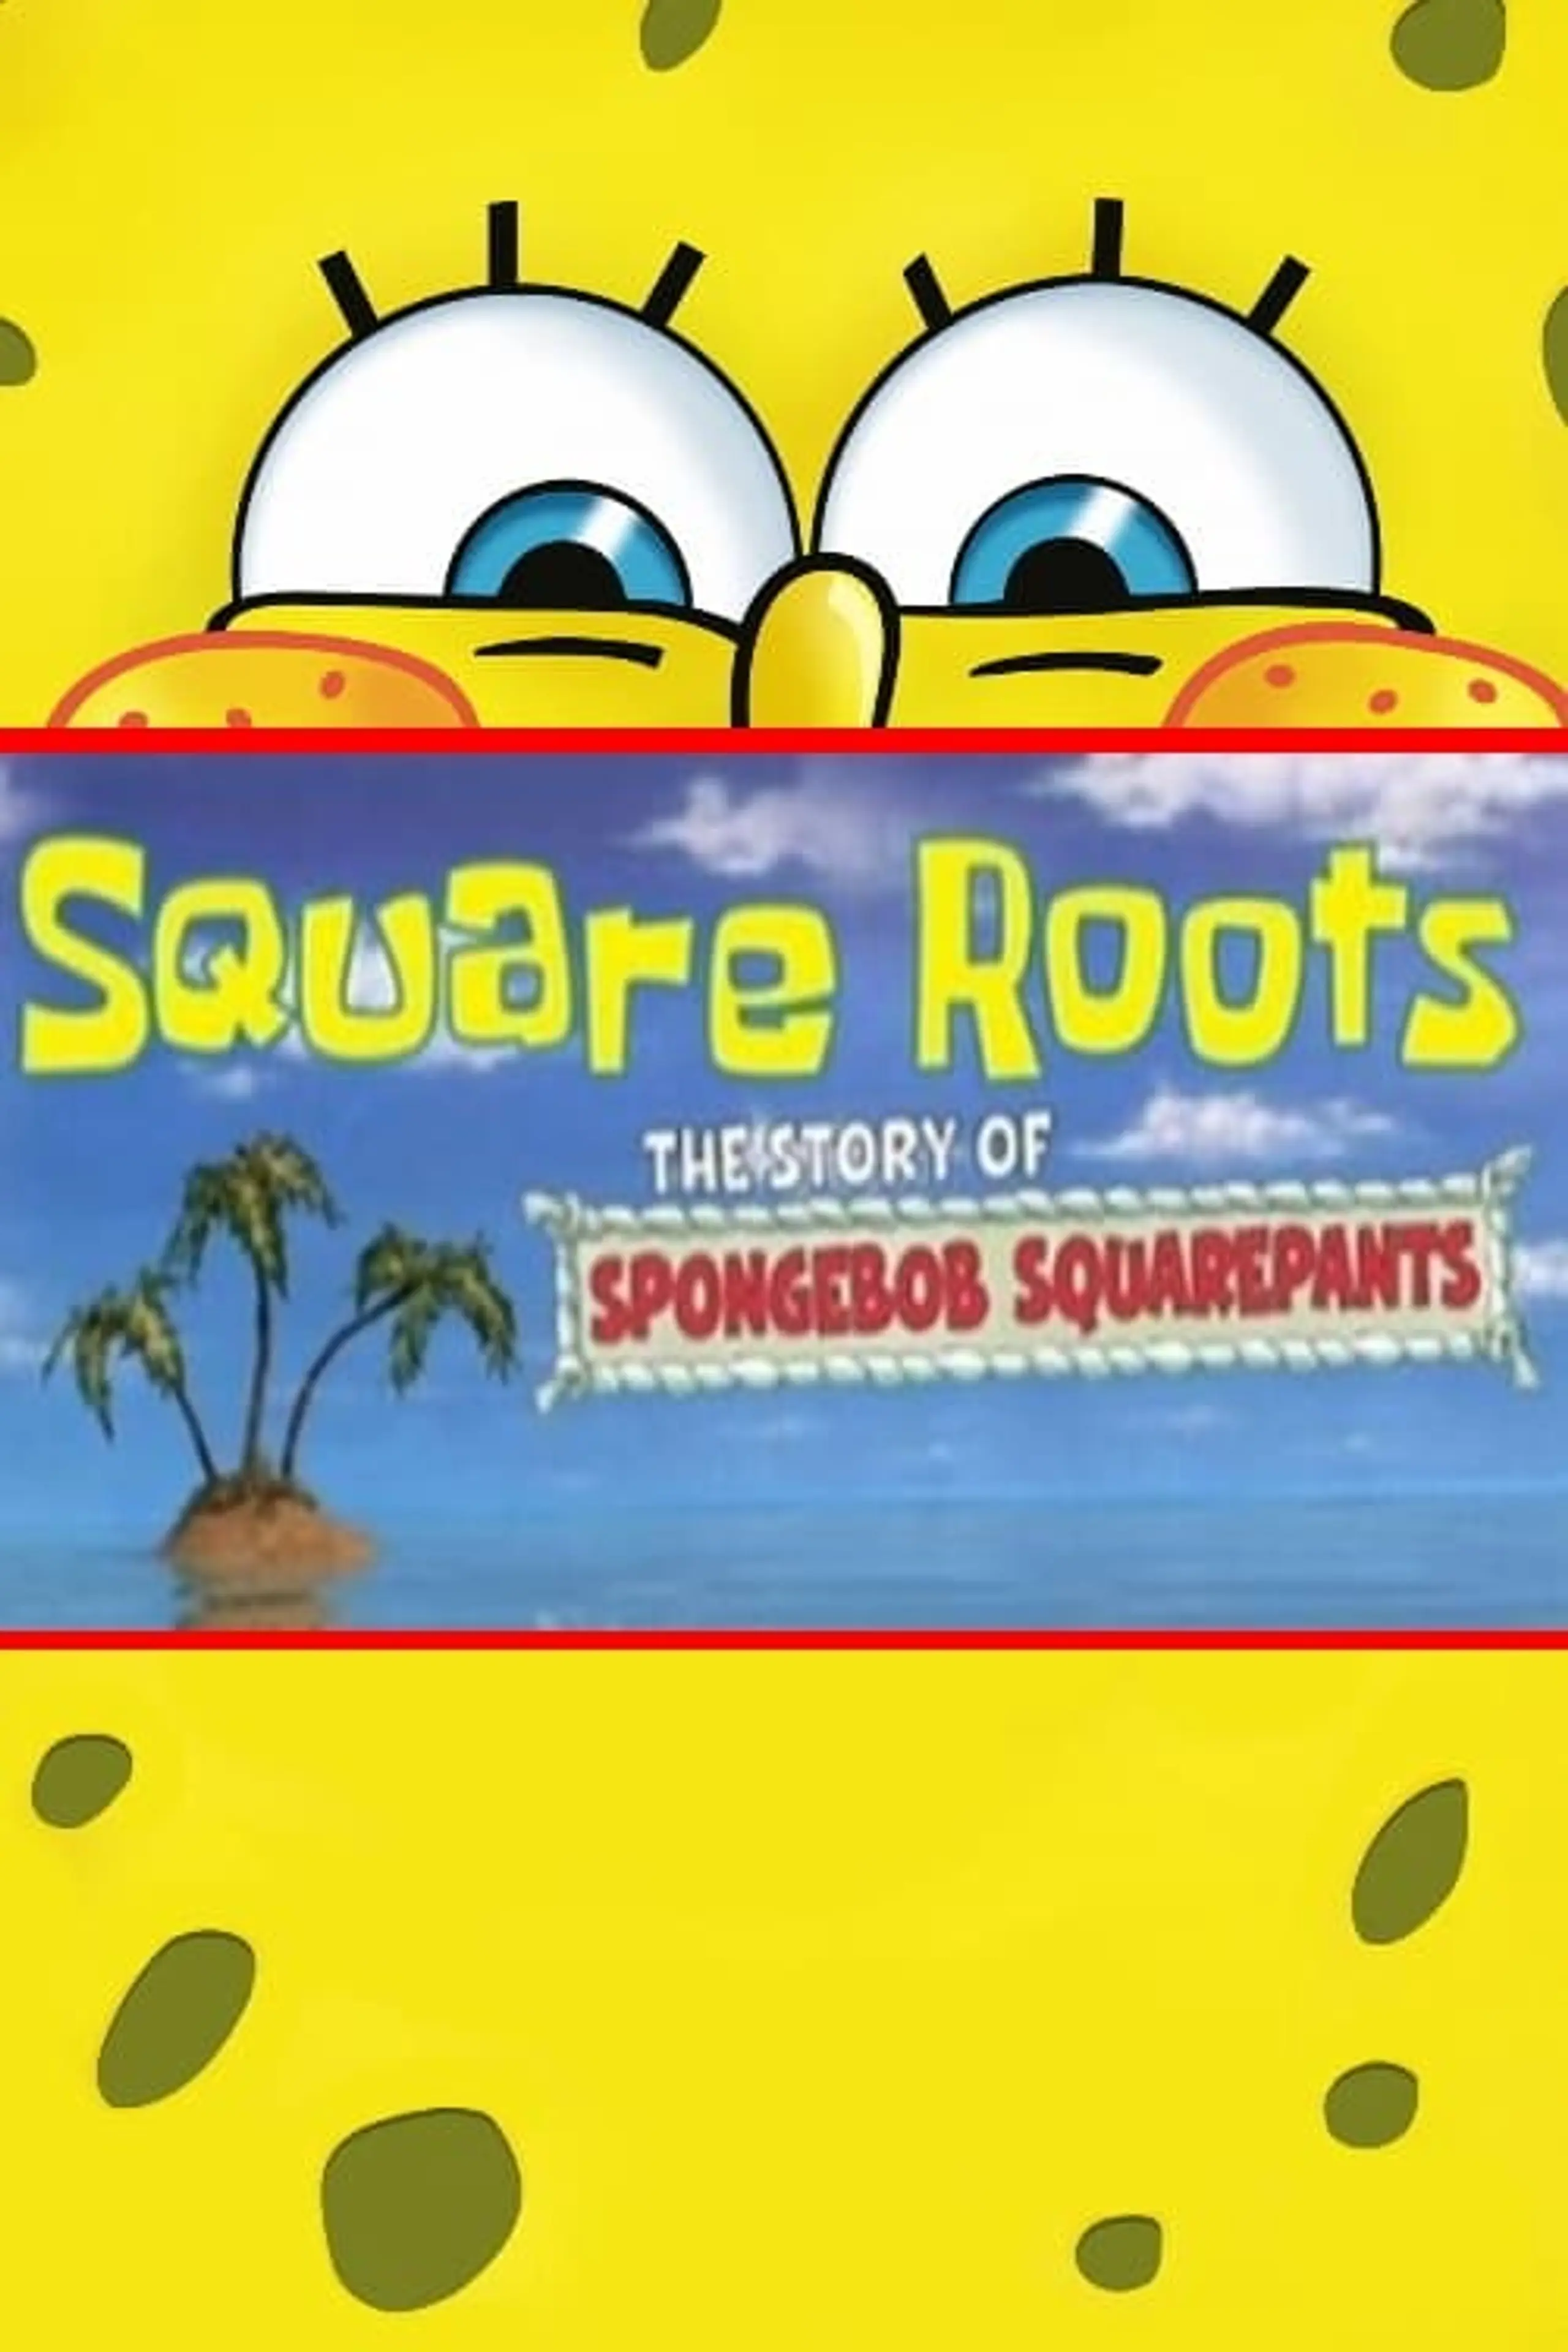 Square Roots: The Story of SpongeBob SquarePants